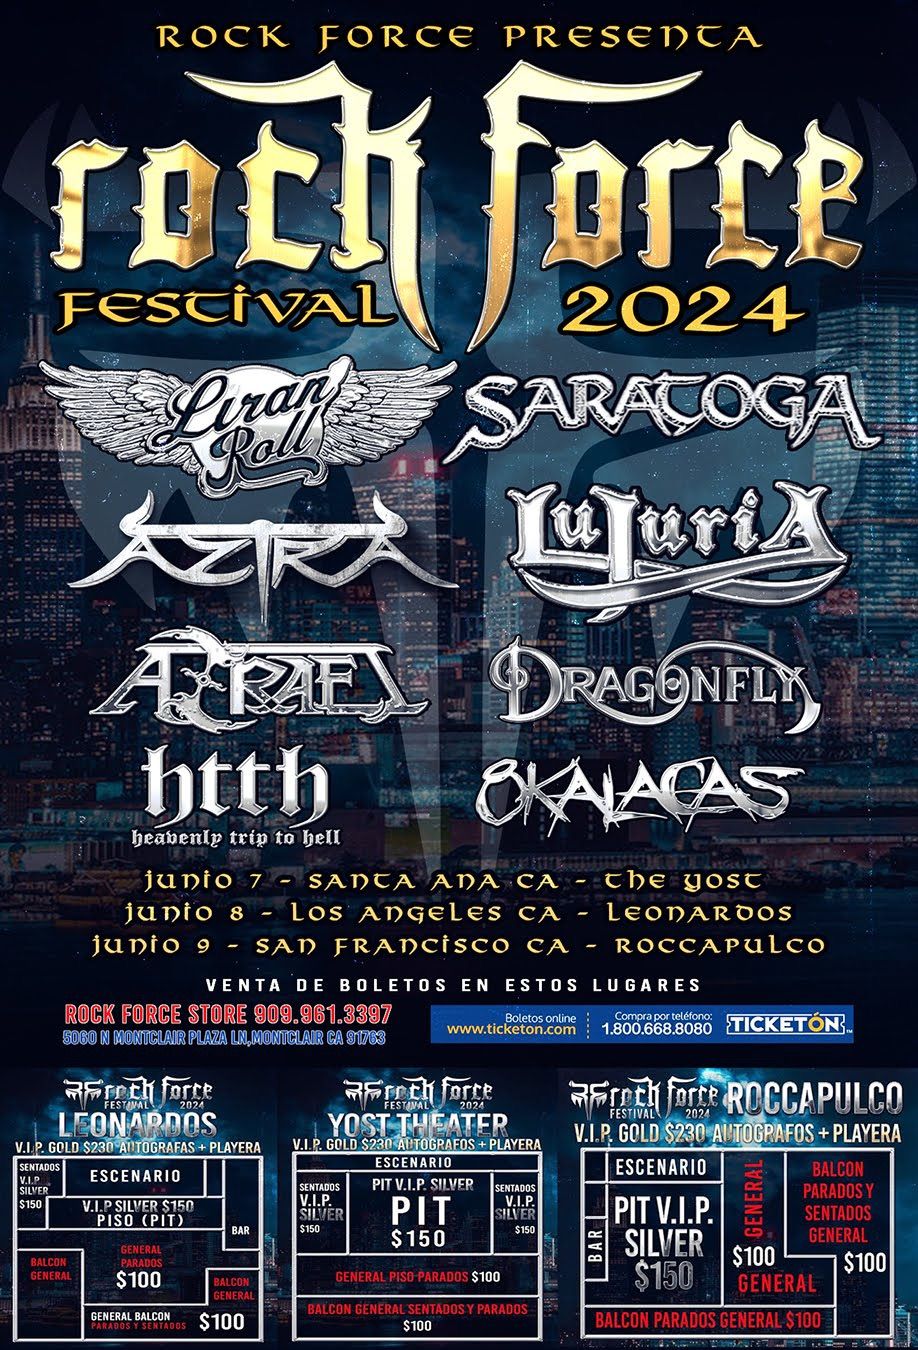 Rock Force Festival 2024 Tickets San Francisco, CA Roccapulco at Ticket\u00f3n